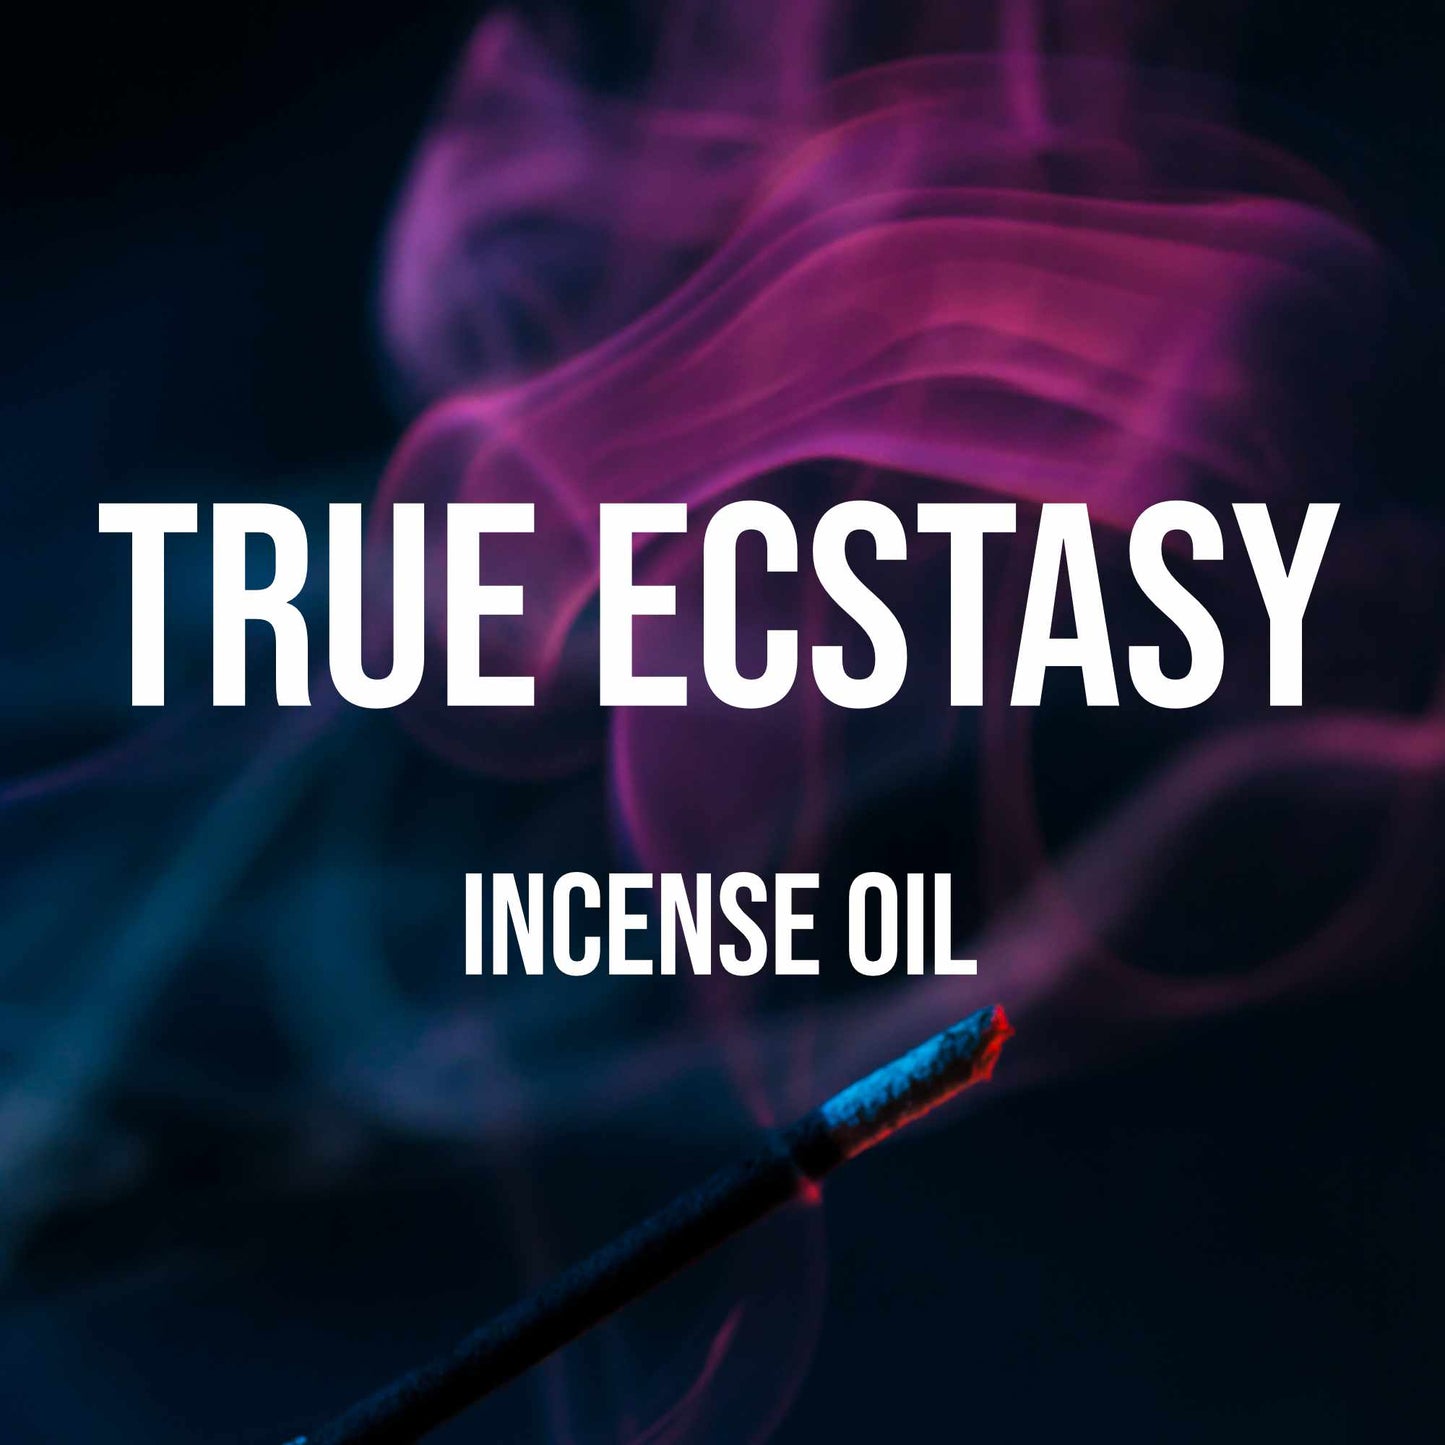 True Ecstasy Incense Oil